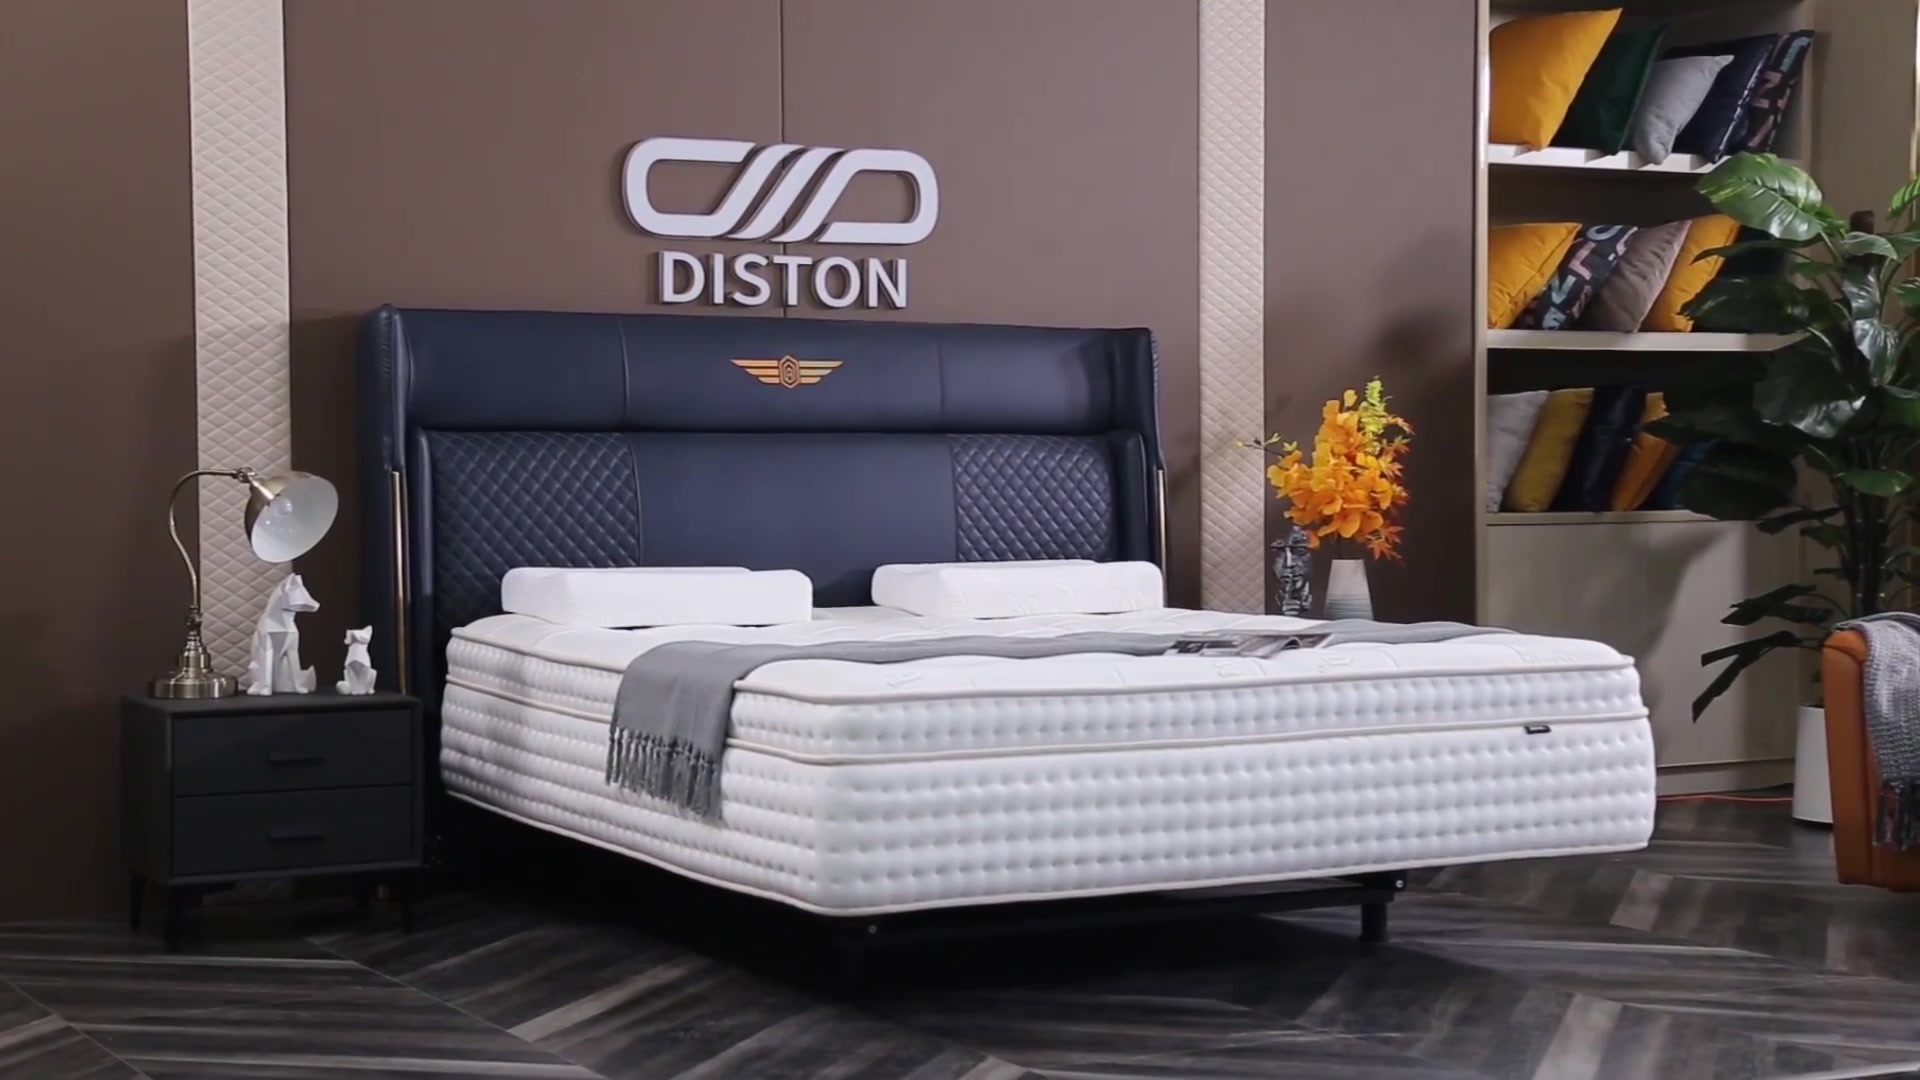 DISTON Smart Bed